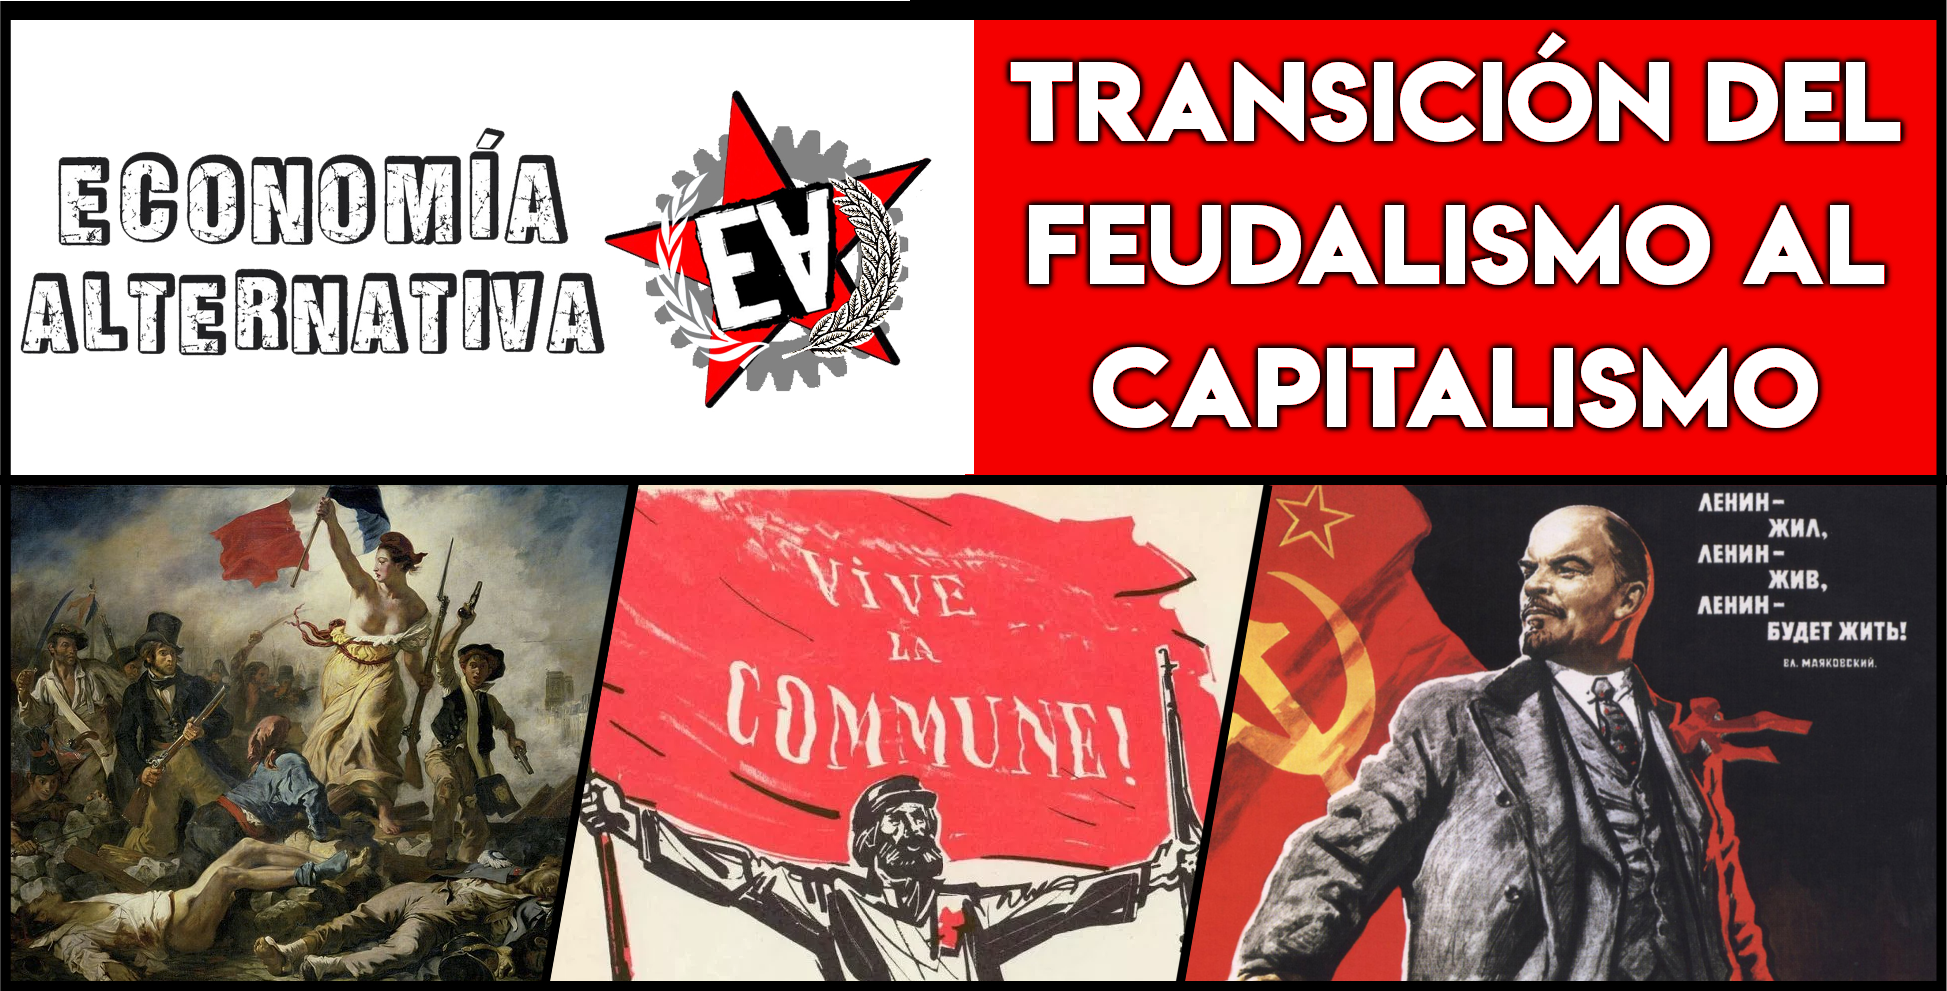 transicion del feudalismo al capitalismo.png